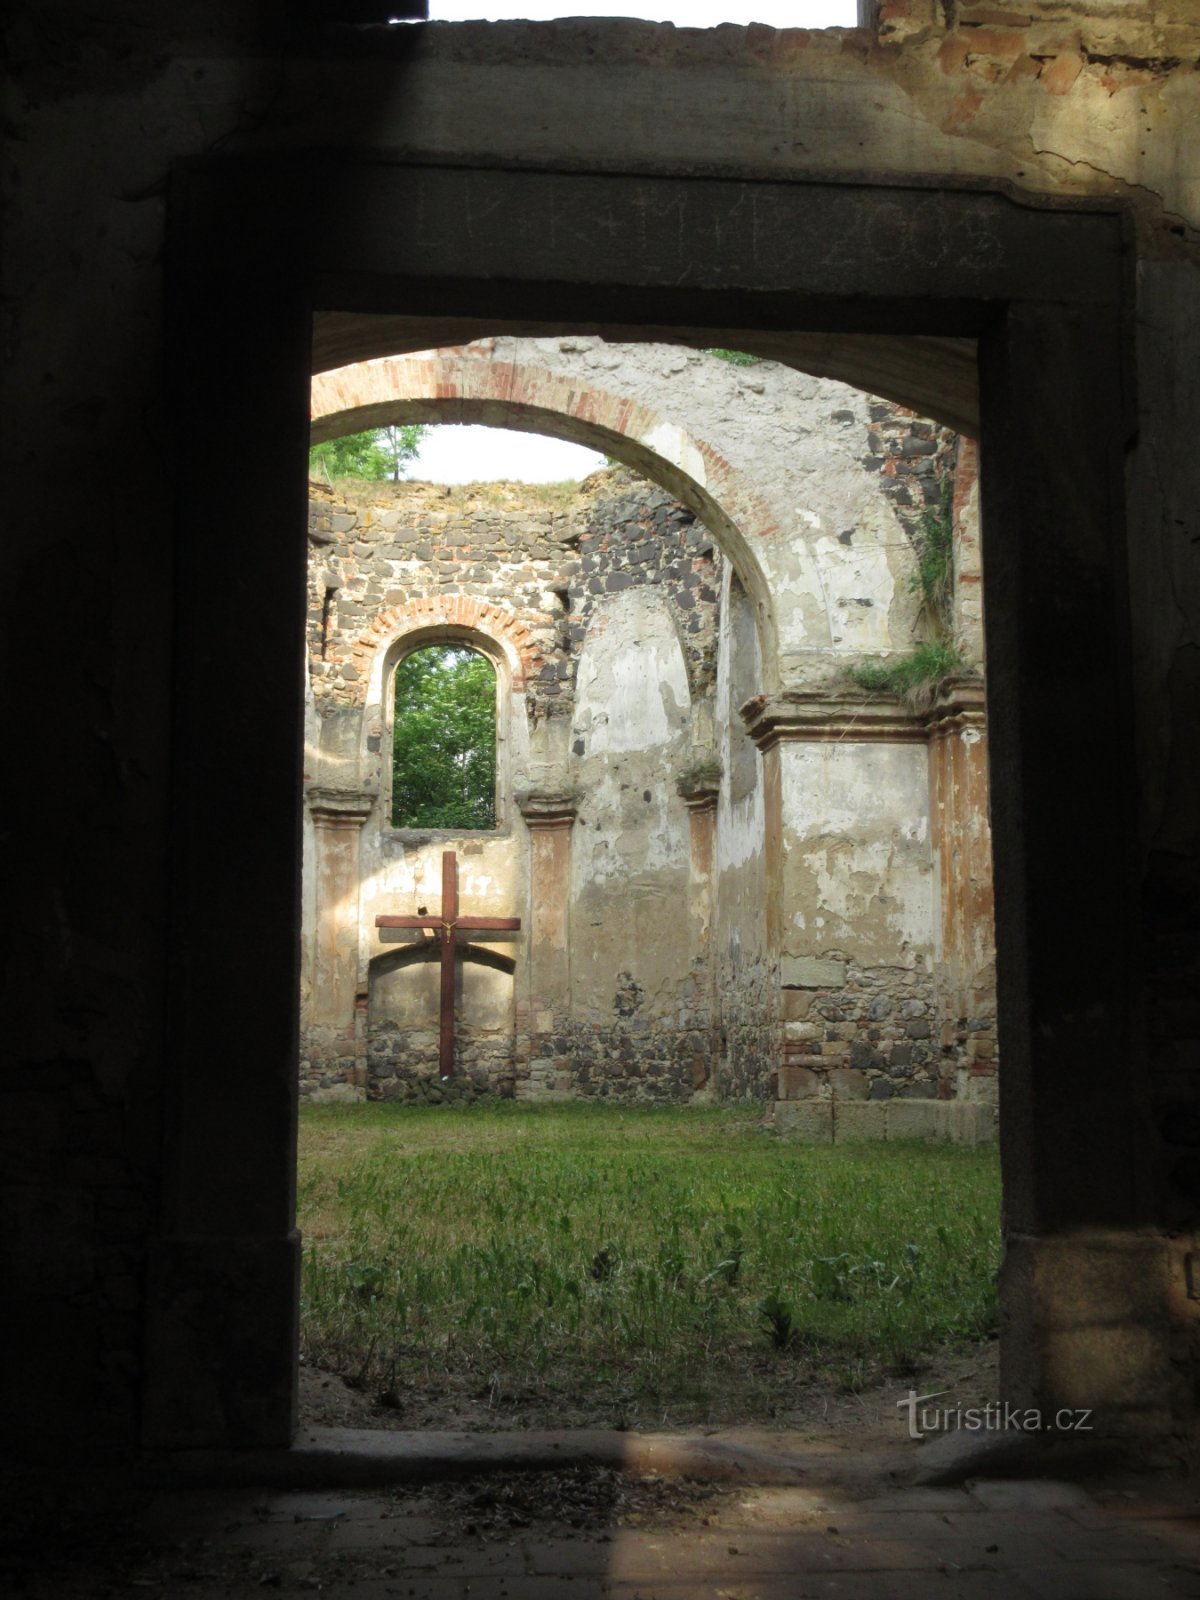 Zlovědice - ruïnes van de kerk van St. Michael